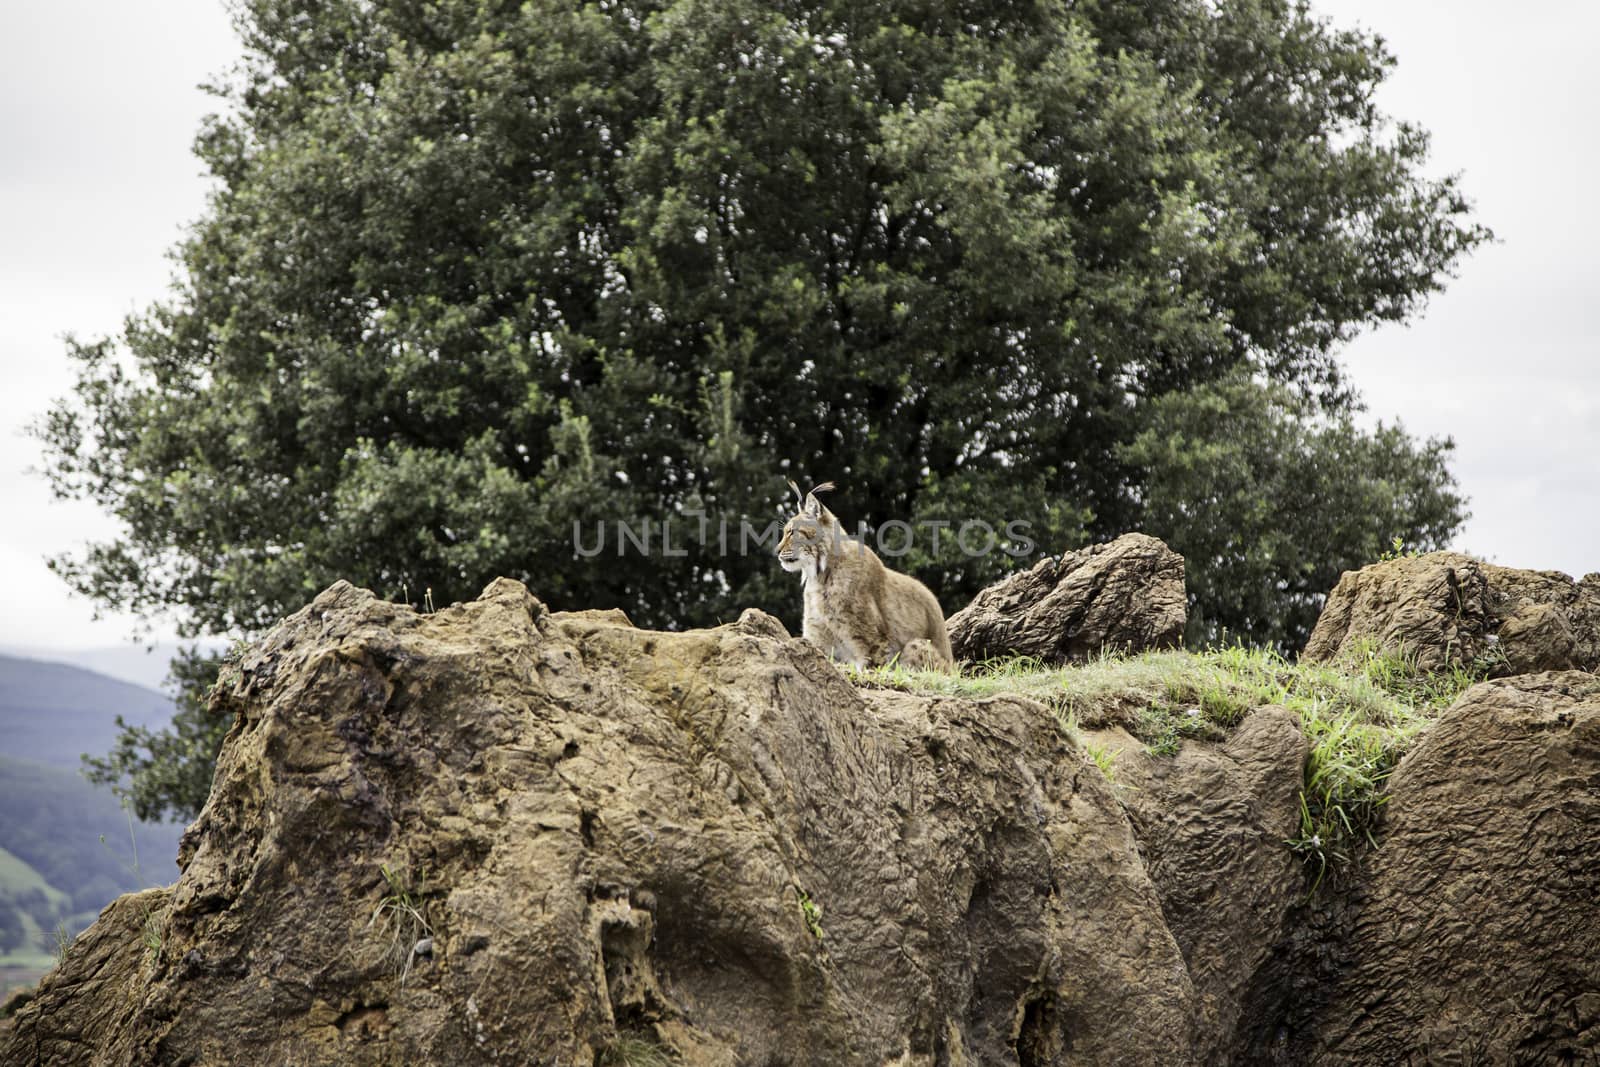 Wild lynx by esebene